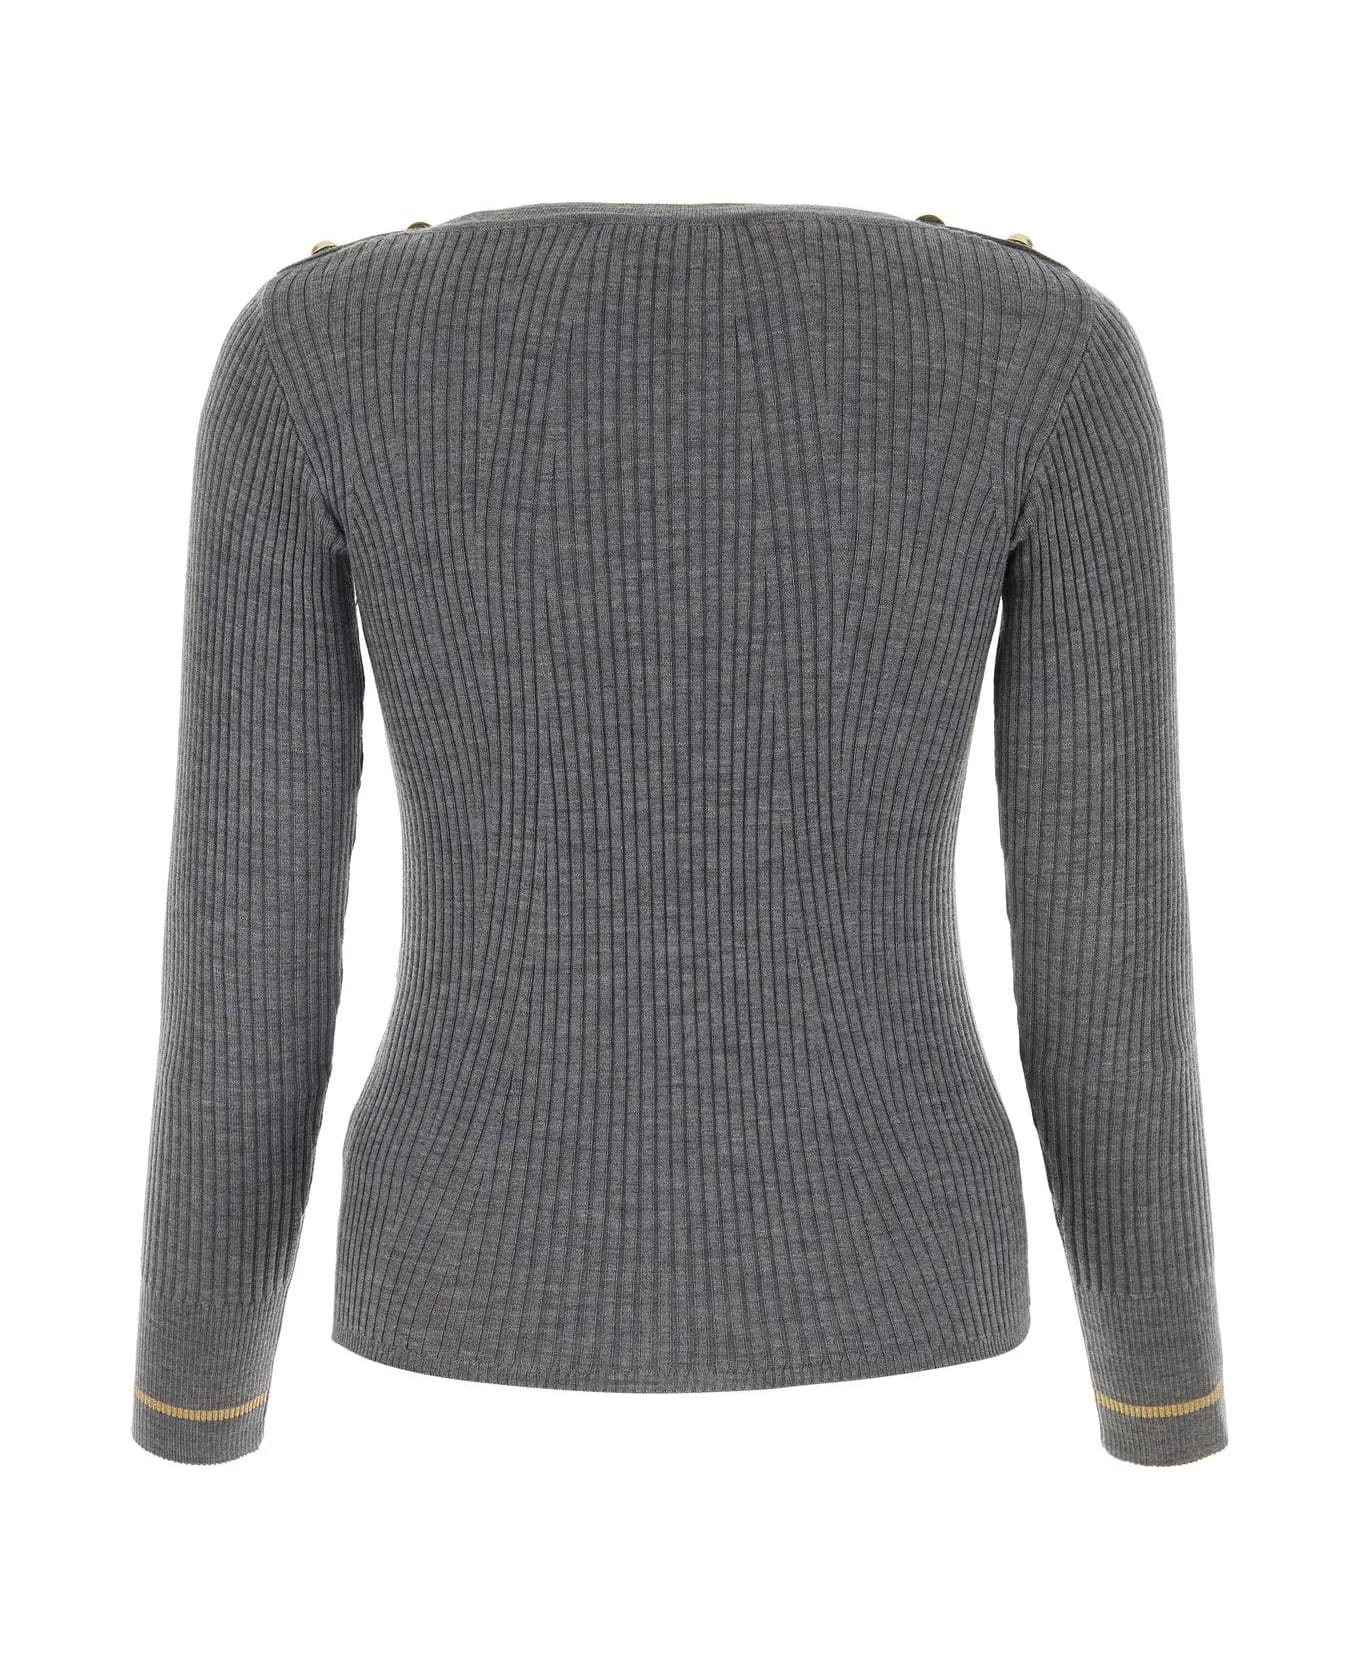 Max Mara Studio Grey Wool Sweater - Grey